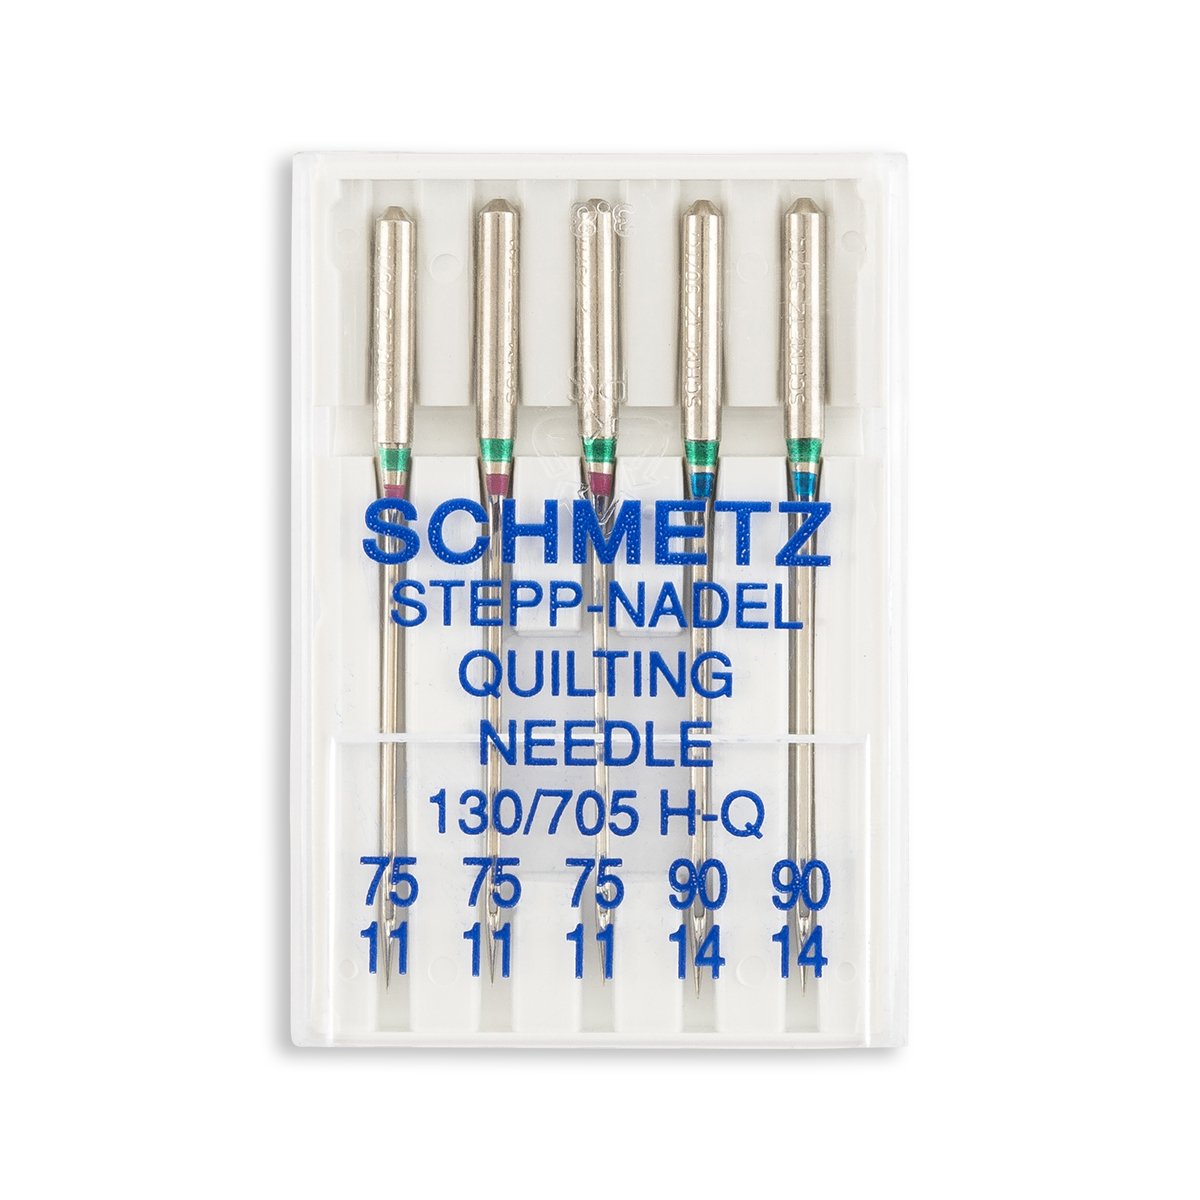 Schmetz Universal Needles 90/14 - Alan Teather Quilting